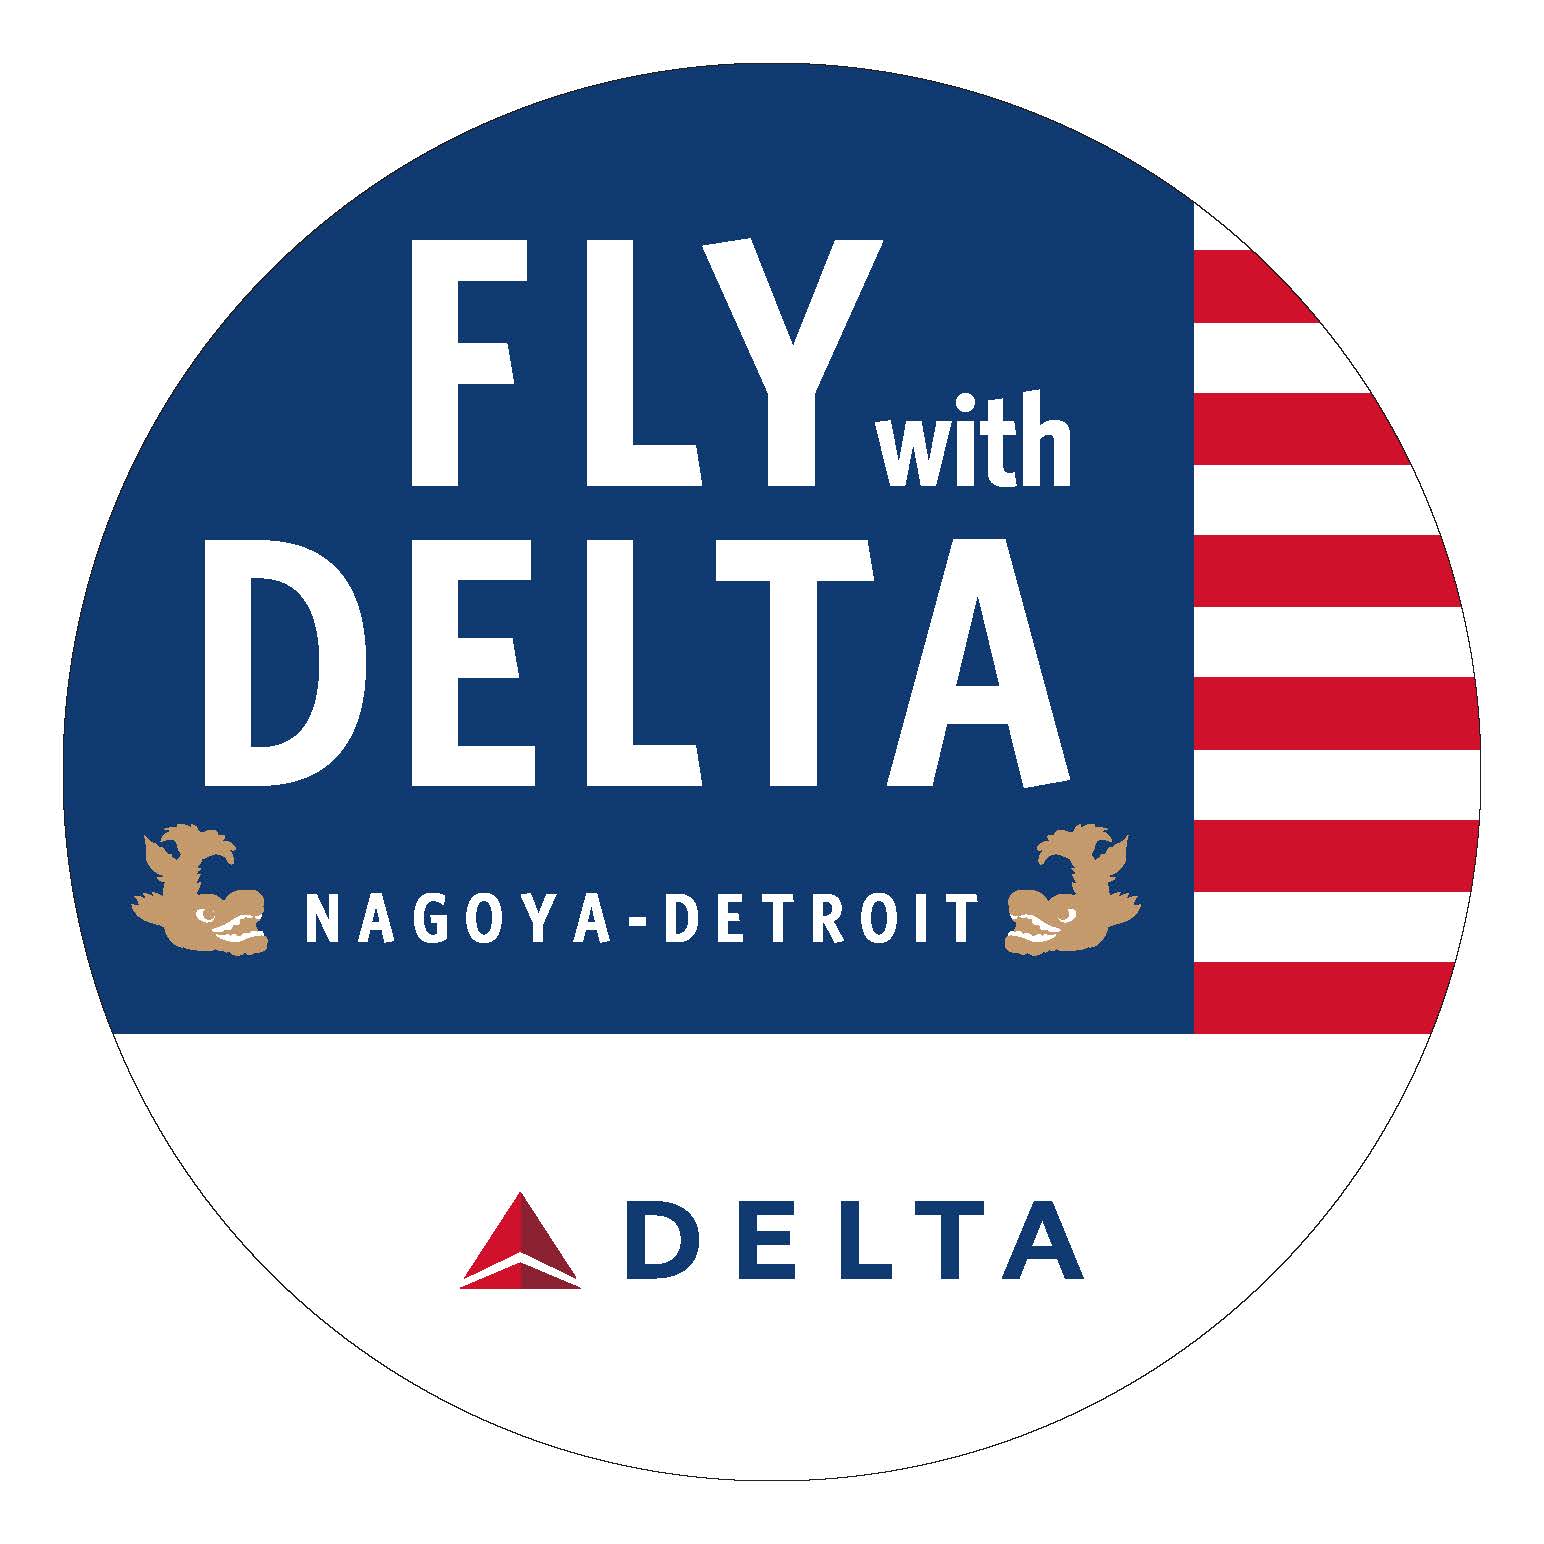 Delta original sticker for Fly with Delta campaign